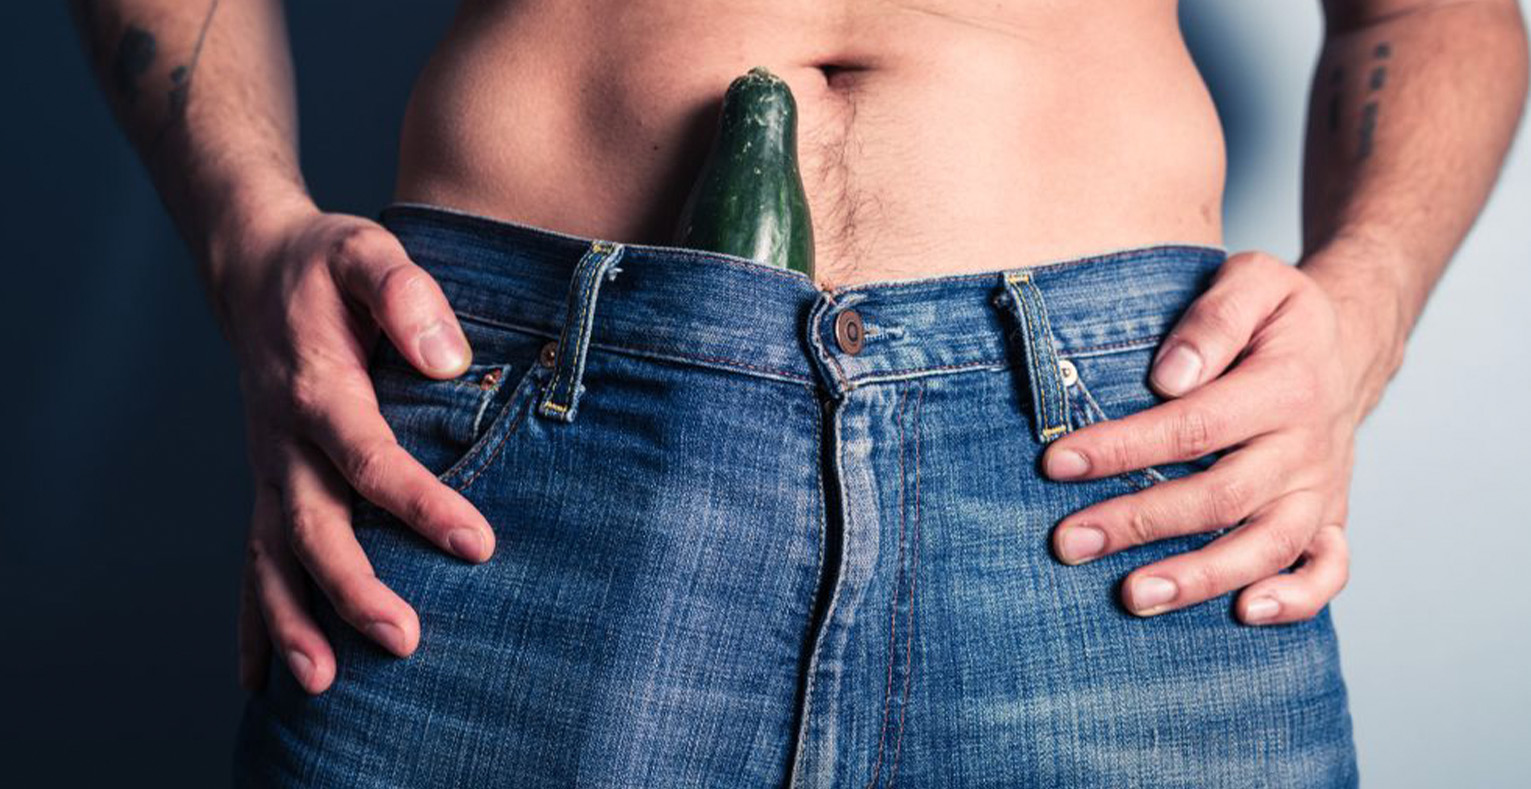 Cucumber in Pants